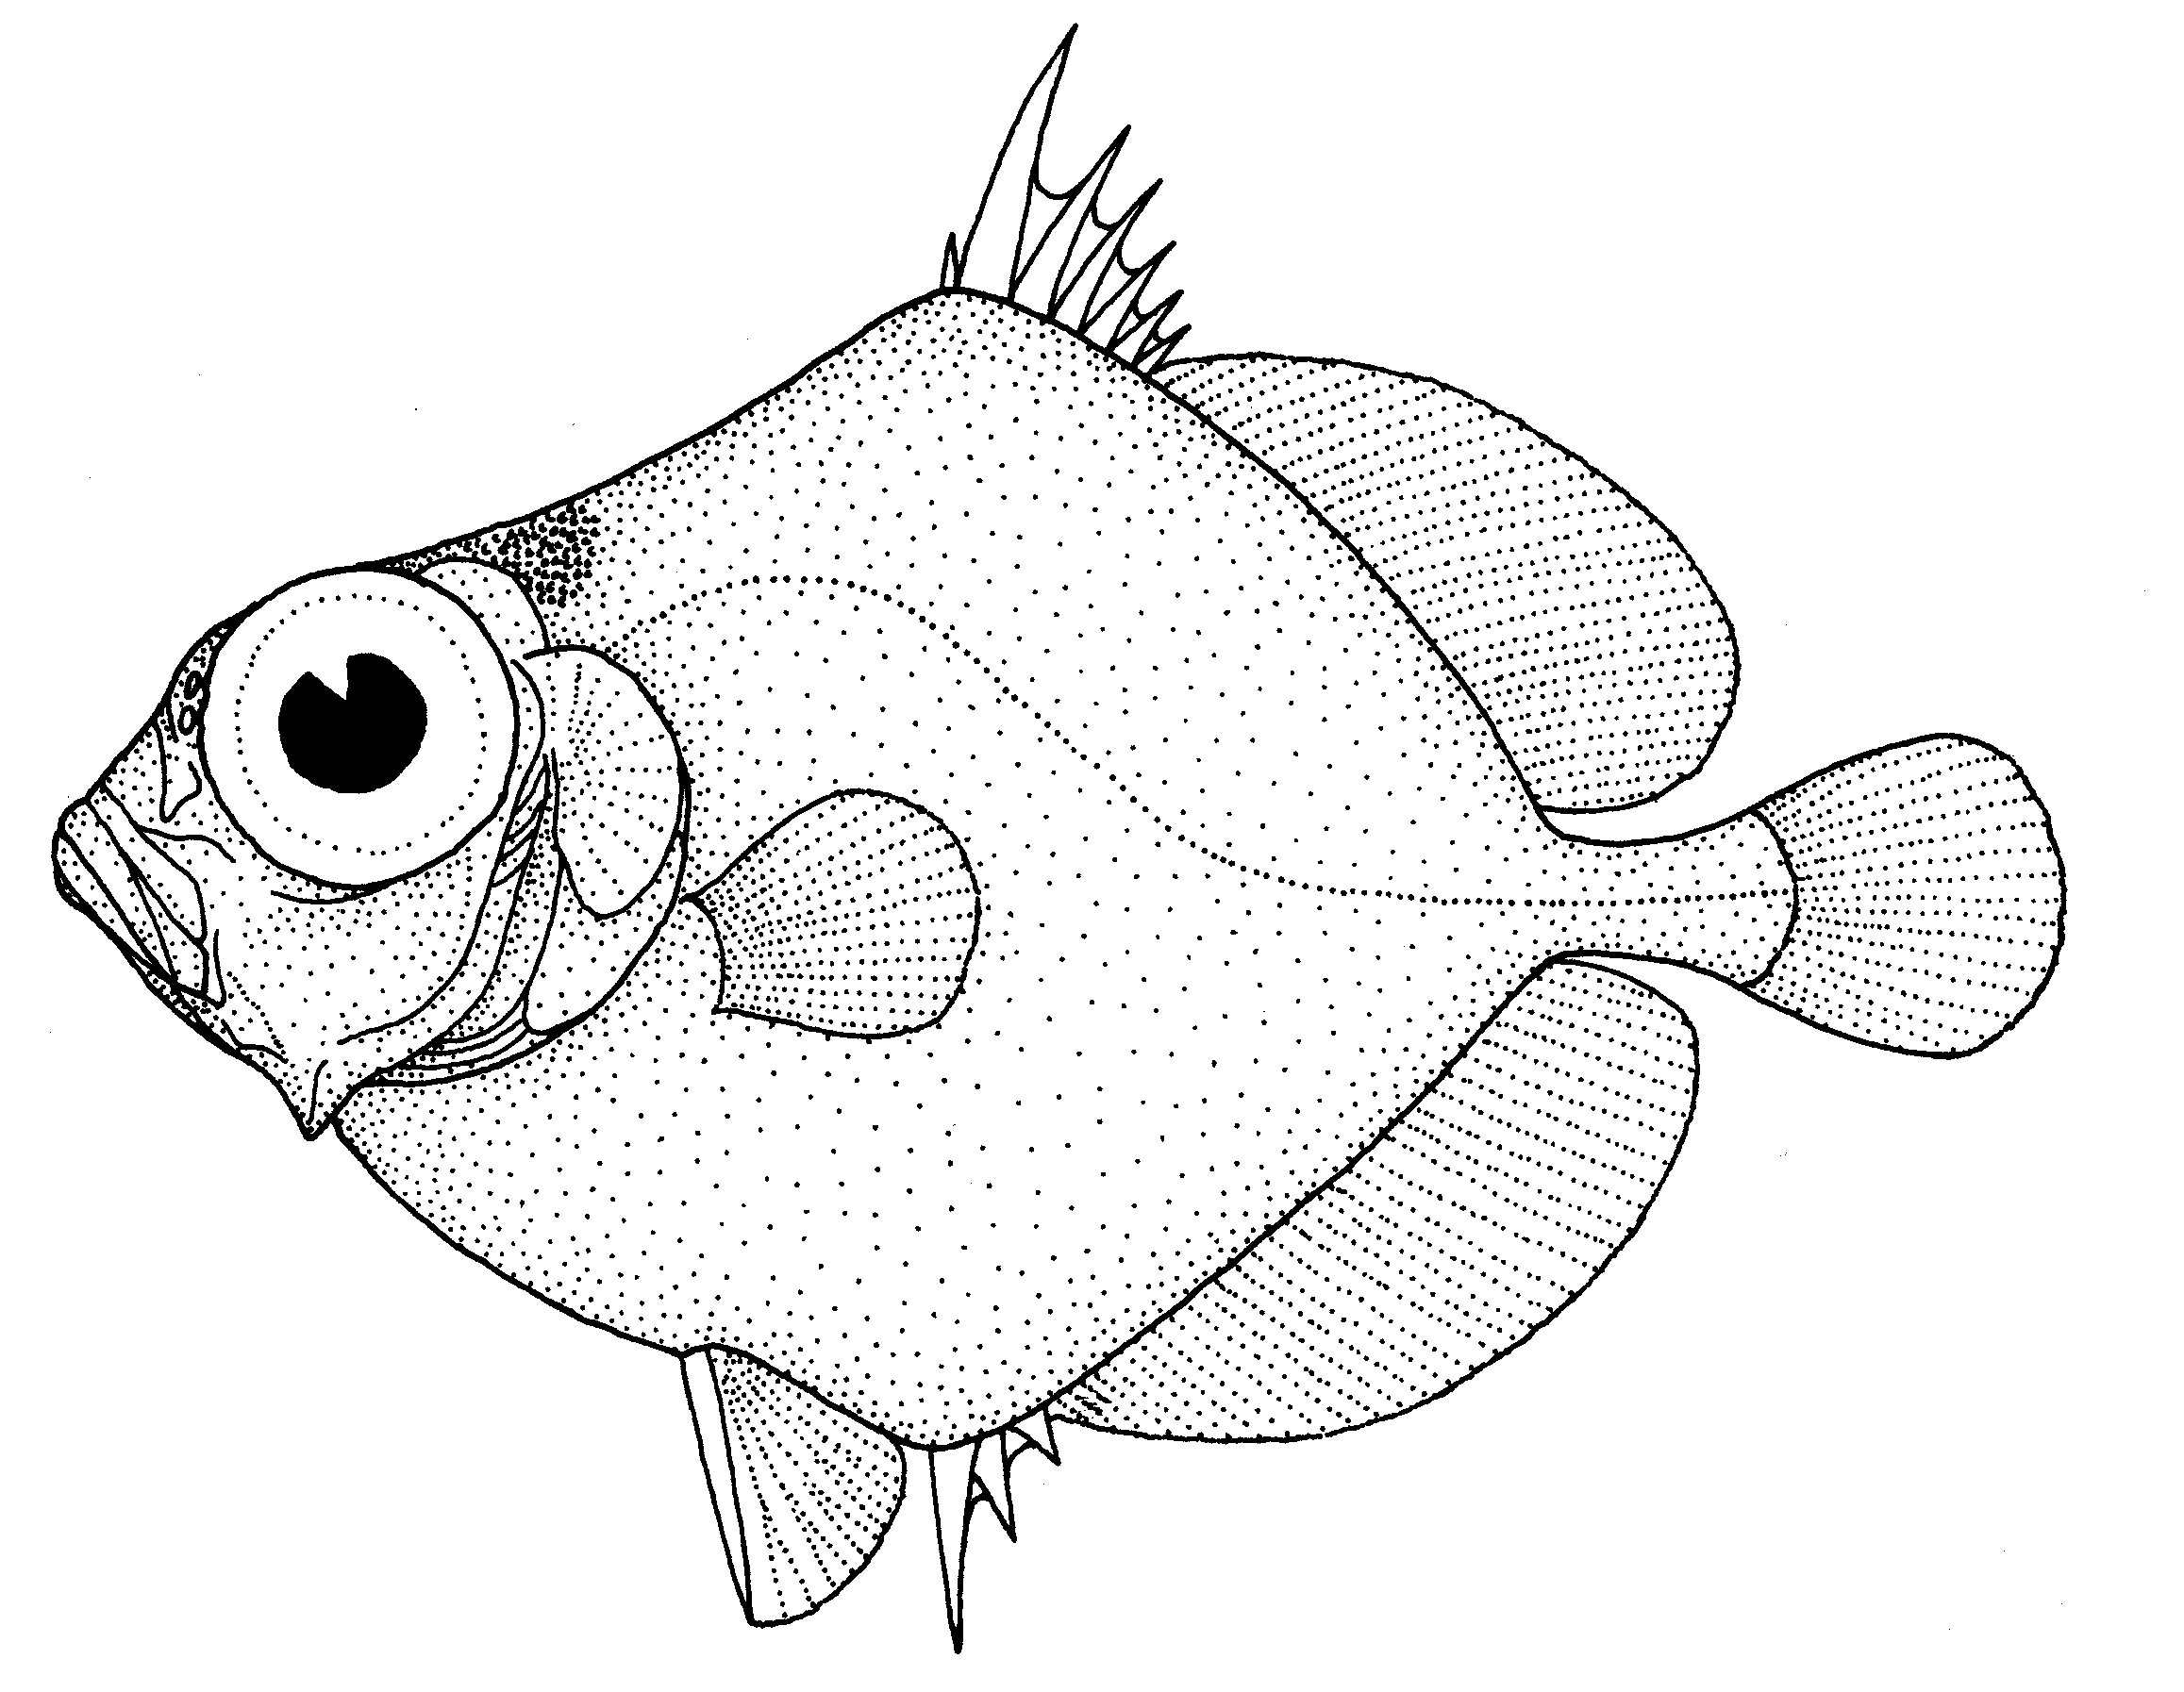 Neocyttus rhomboidalis